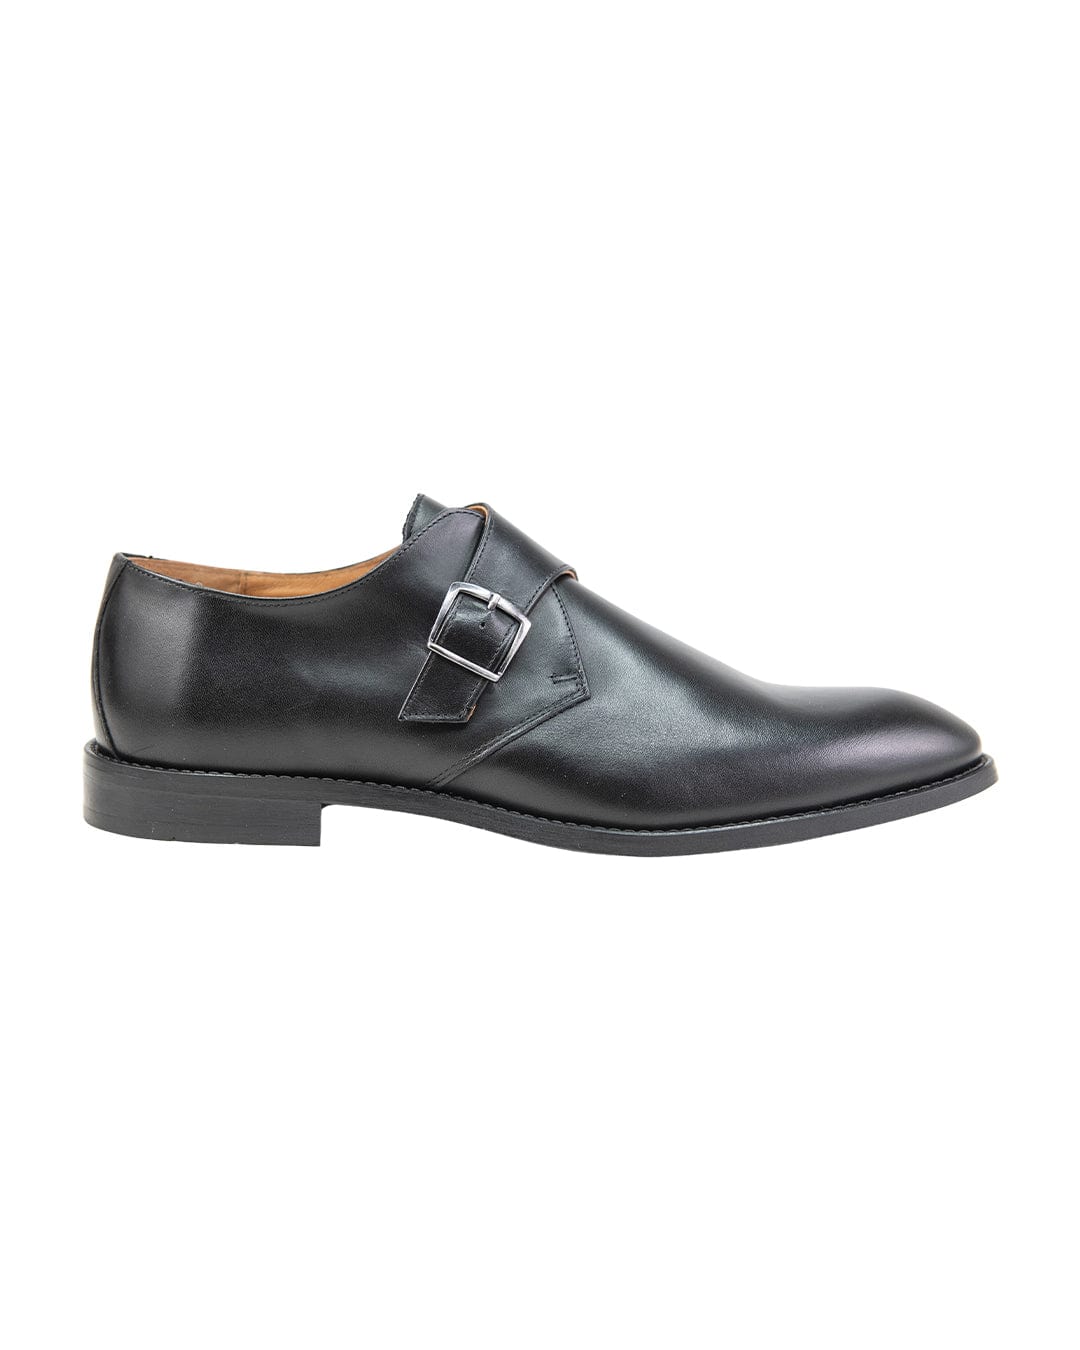 Gagliardi Shoes Gagliardi Black Leather Single Buckle Monk Strap Shoes